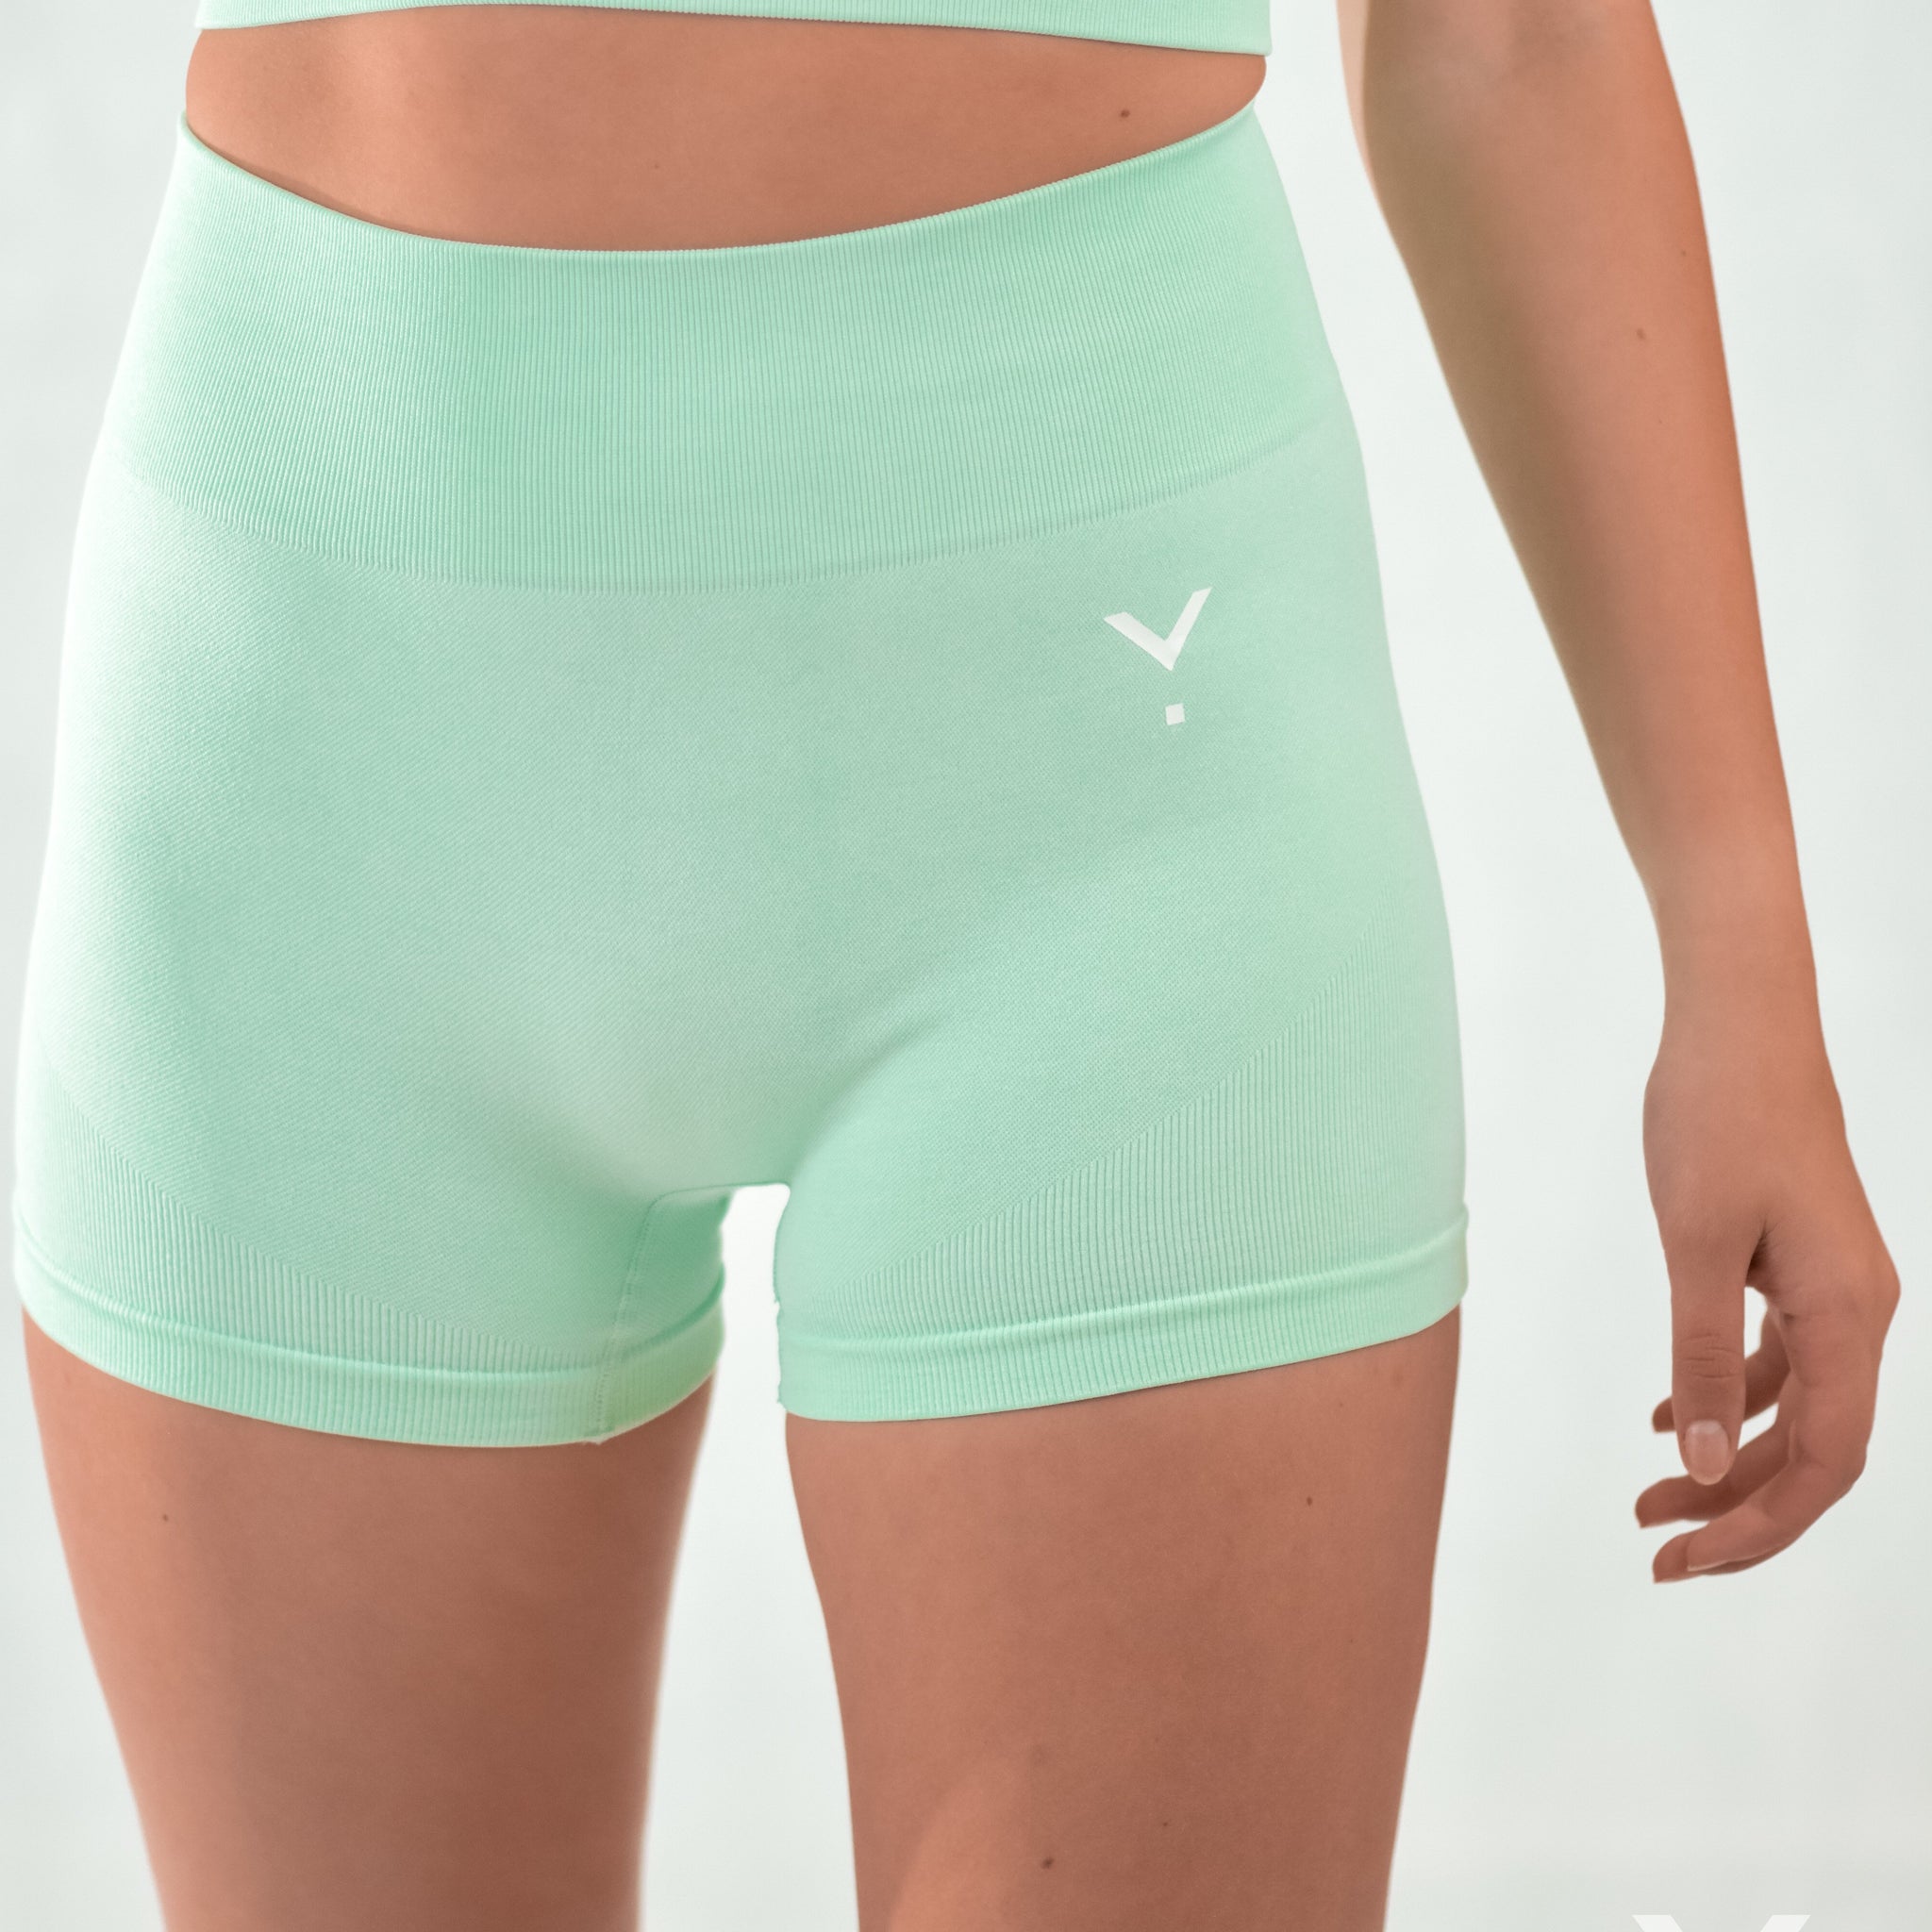 Zeal Shorts Green - Womens Shorts | AVAYOS